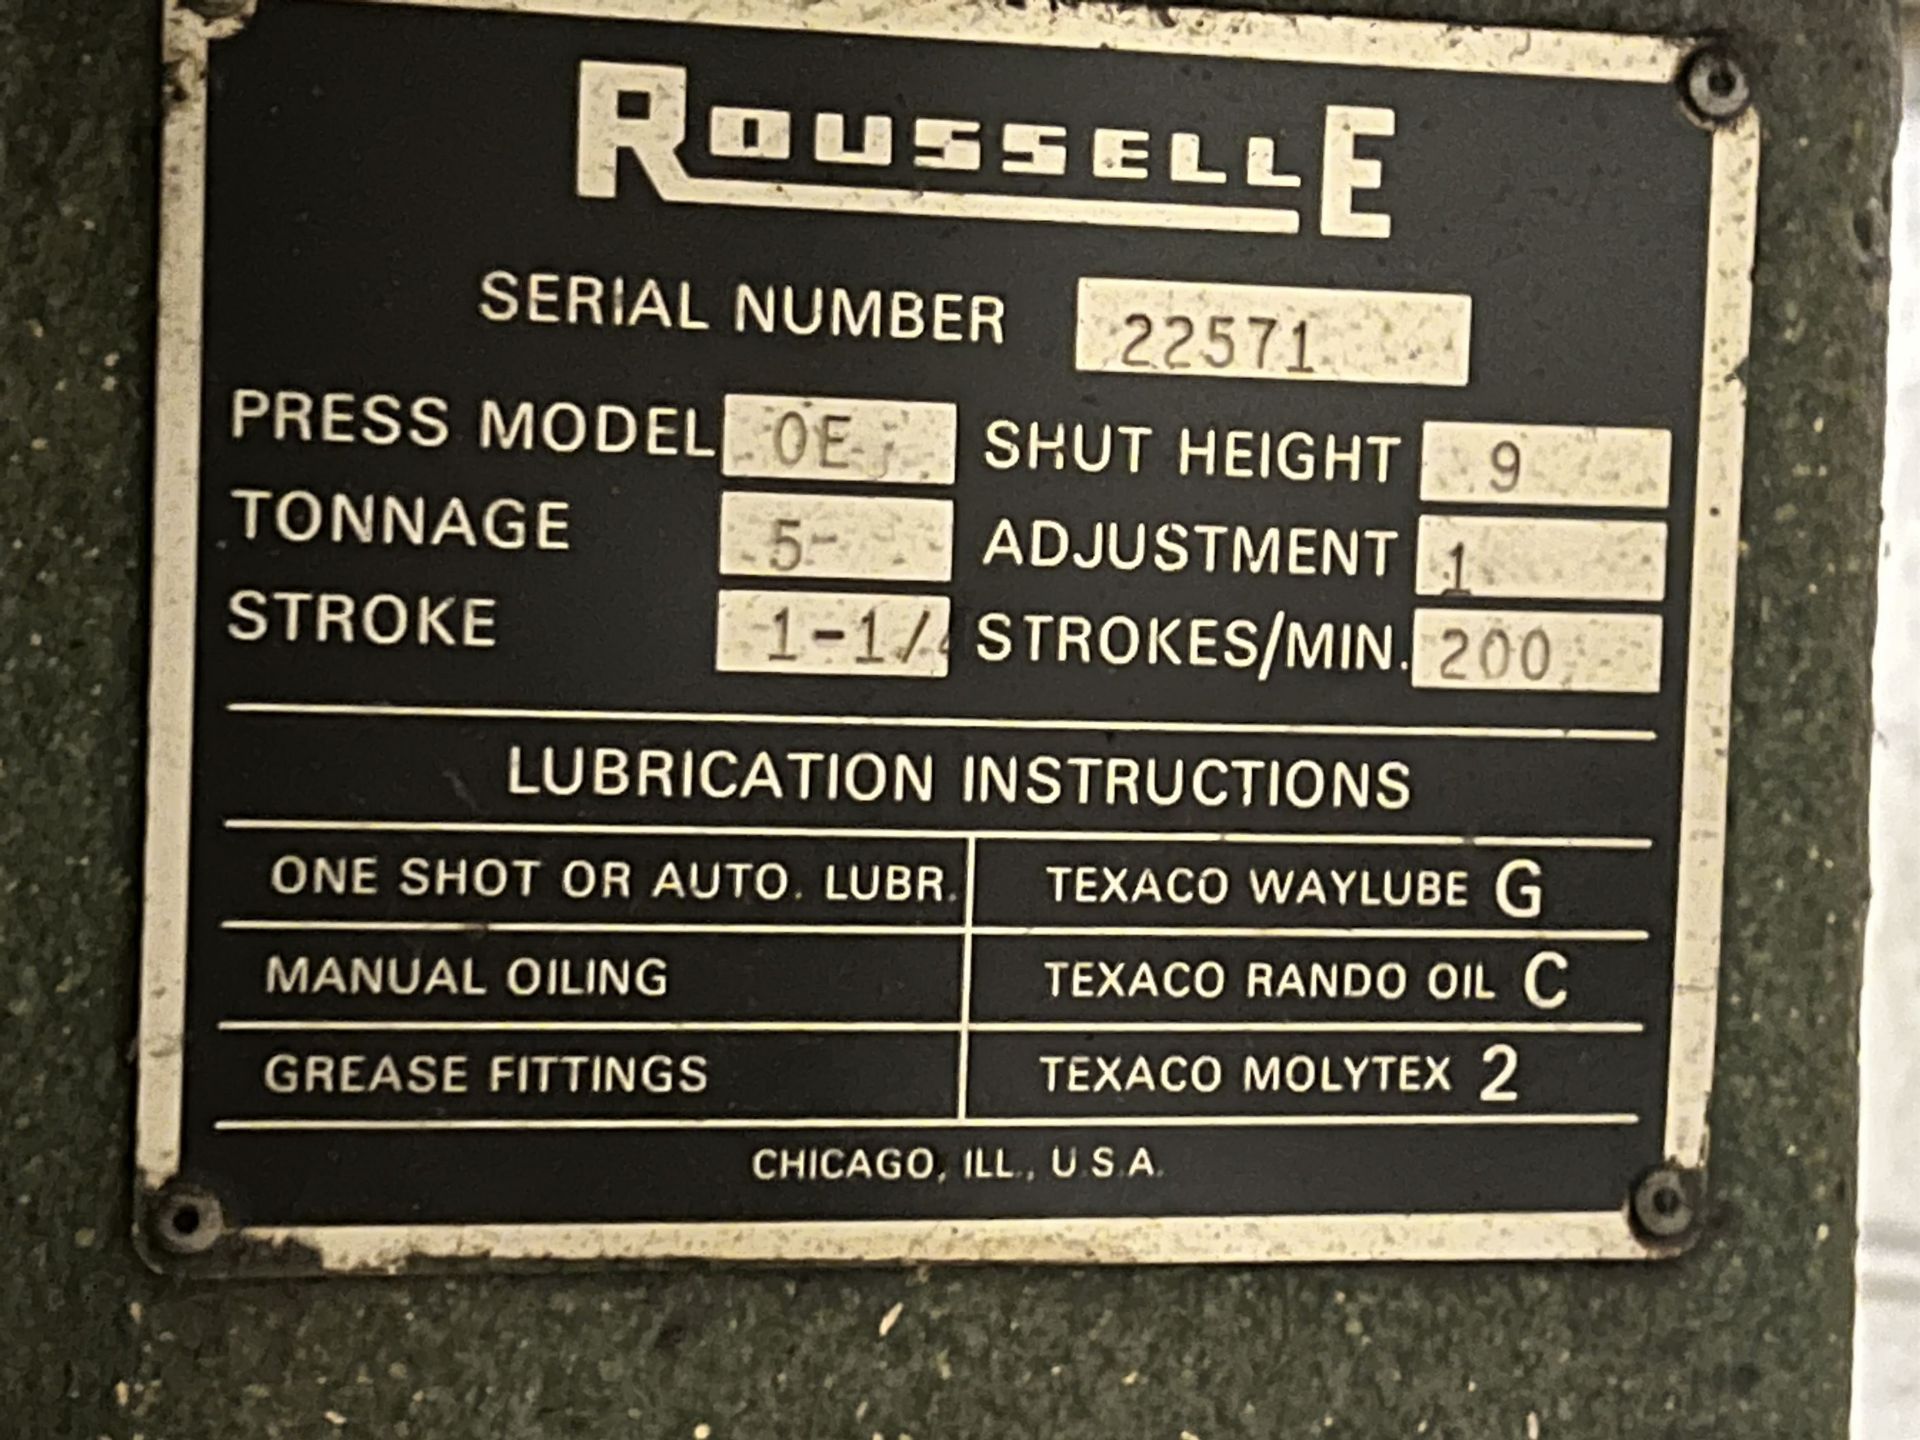 ROUSSELLE No. 0E Punch Press, s/n 22571, 5 Ton, 1-1/4" Stroke, 1" Adj, 9" Shut Height, 200 SPM (This - Image 5 of 6